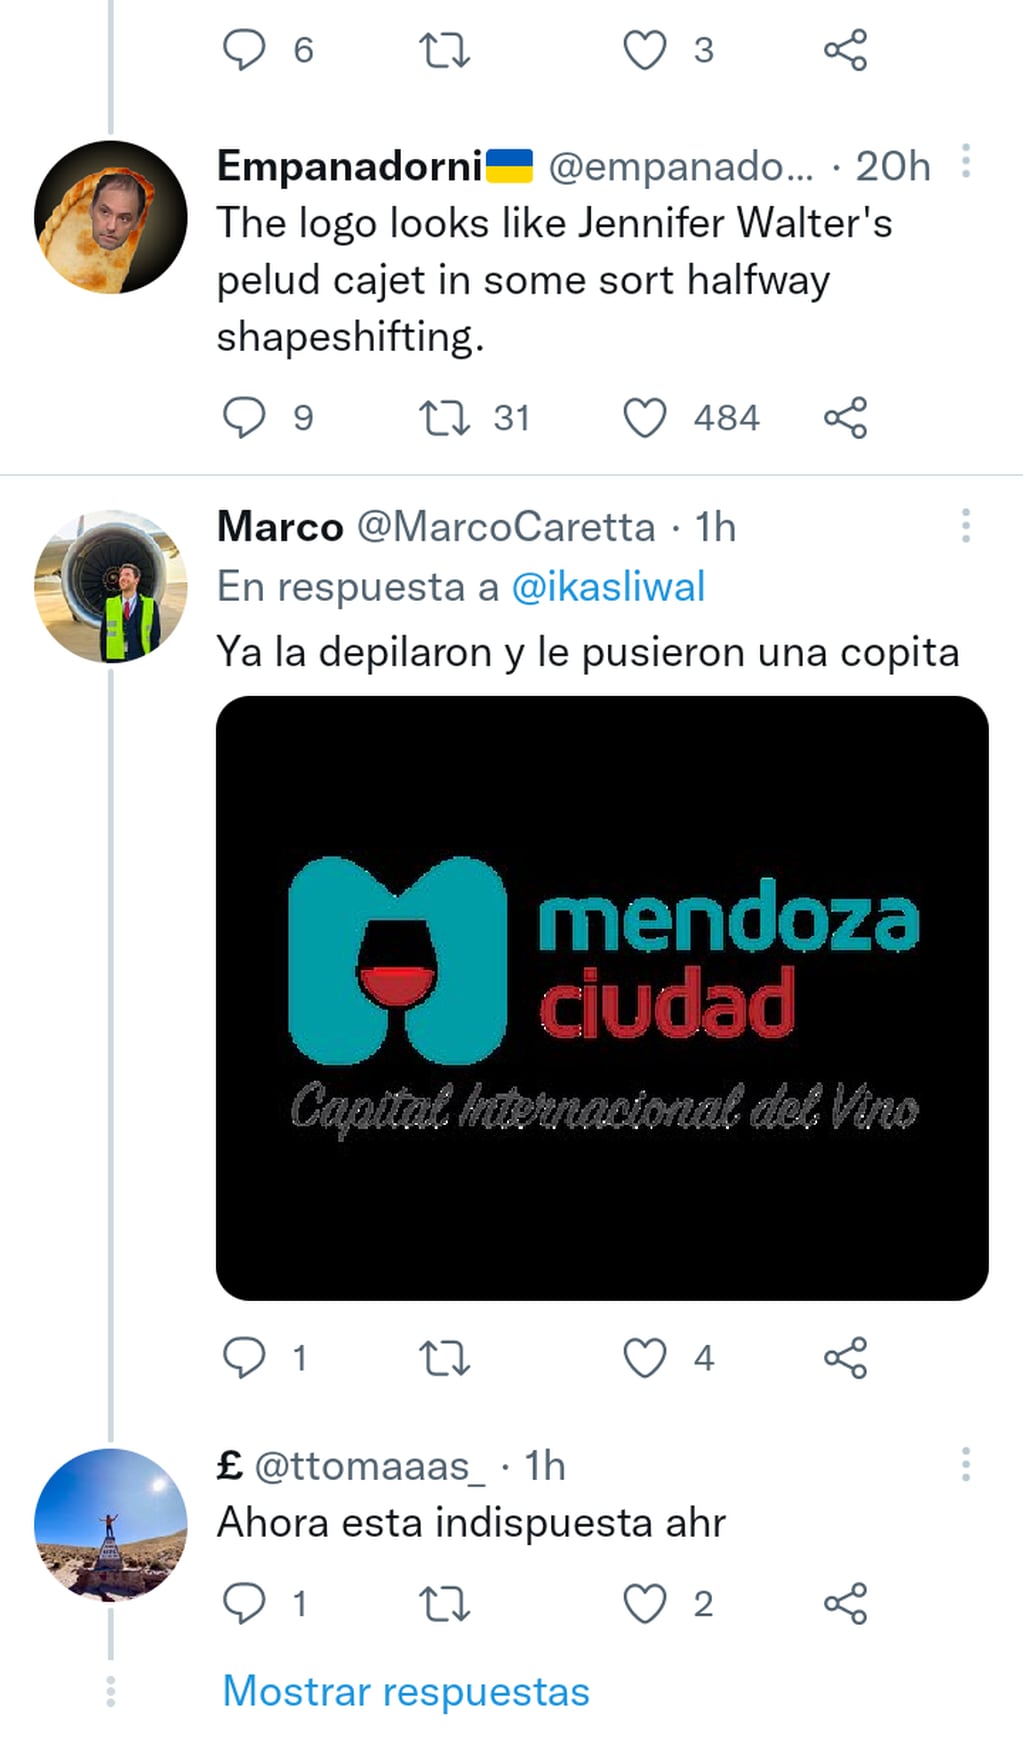 El logo de la Ciudad de Mendoza desató la polémica en Twitter.